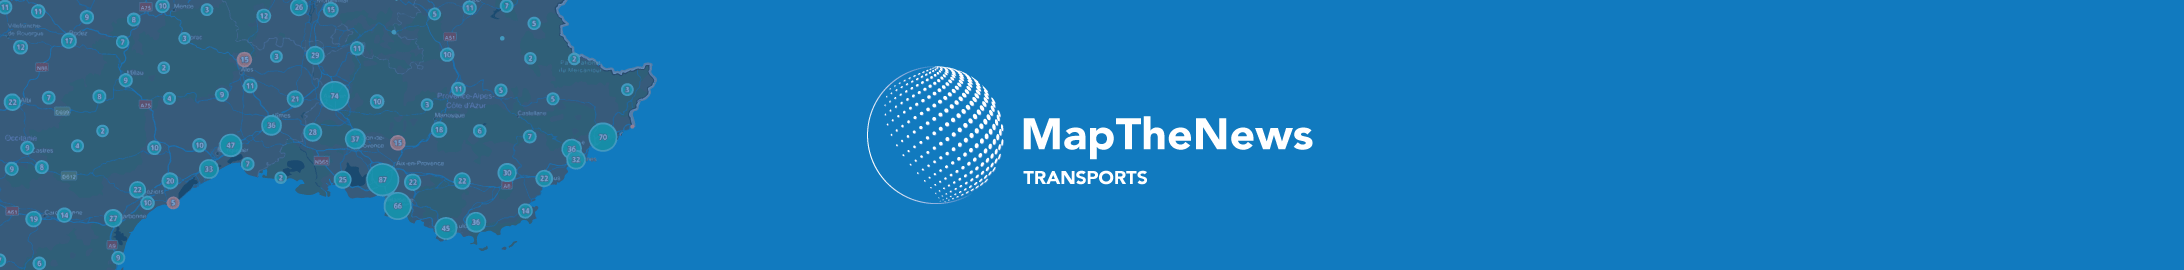 MapTheNews Transports